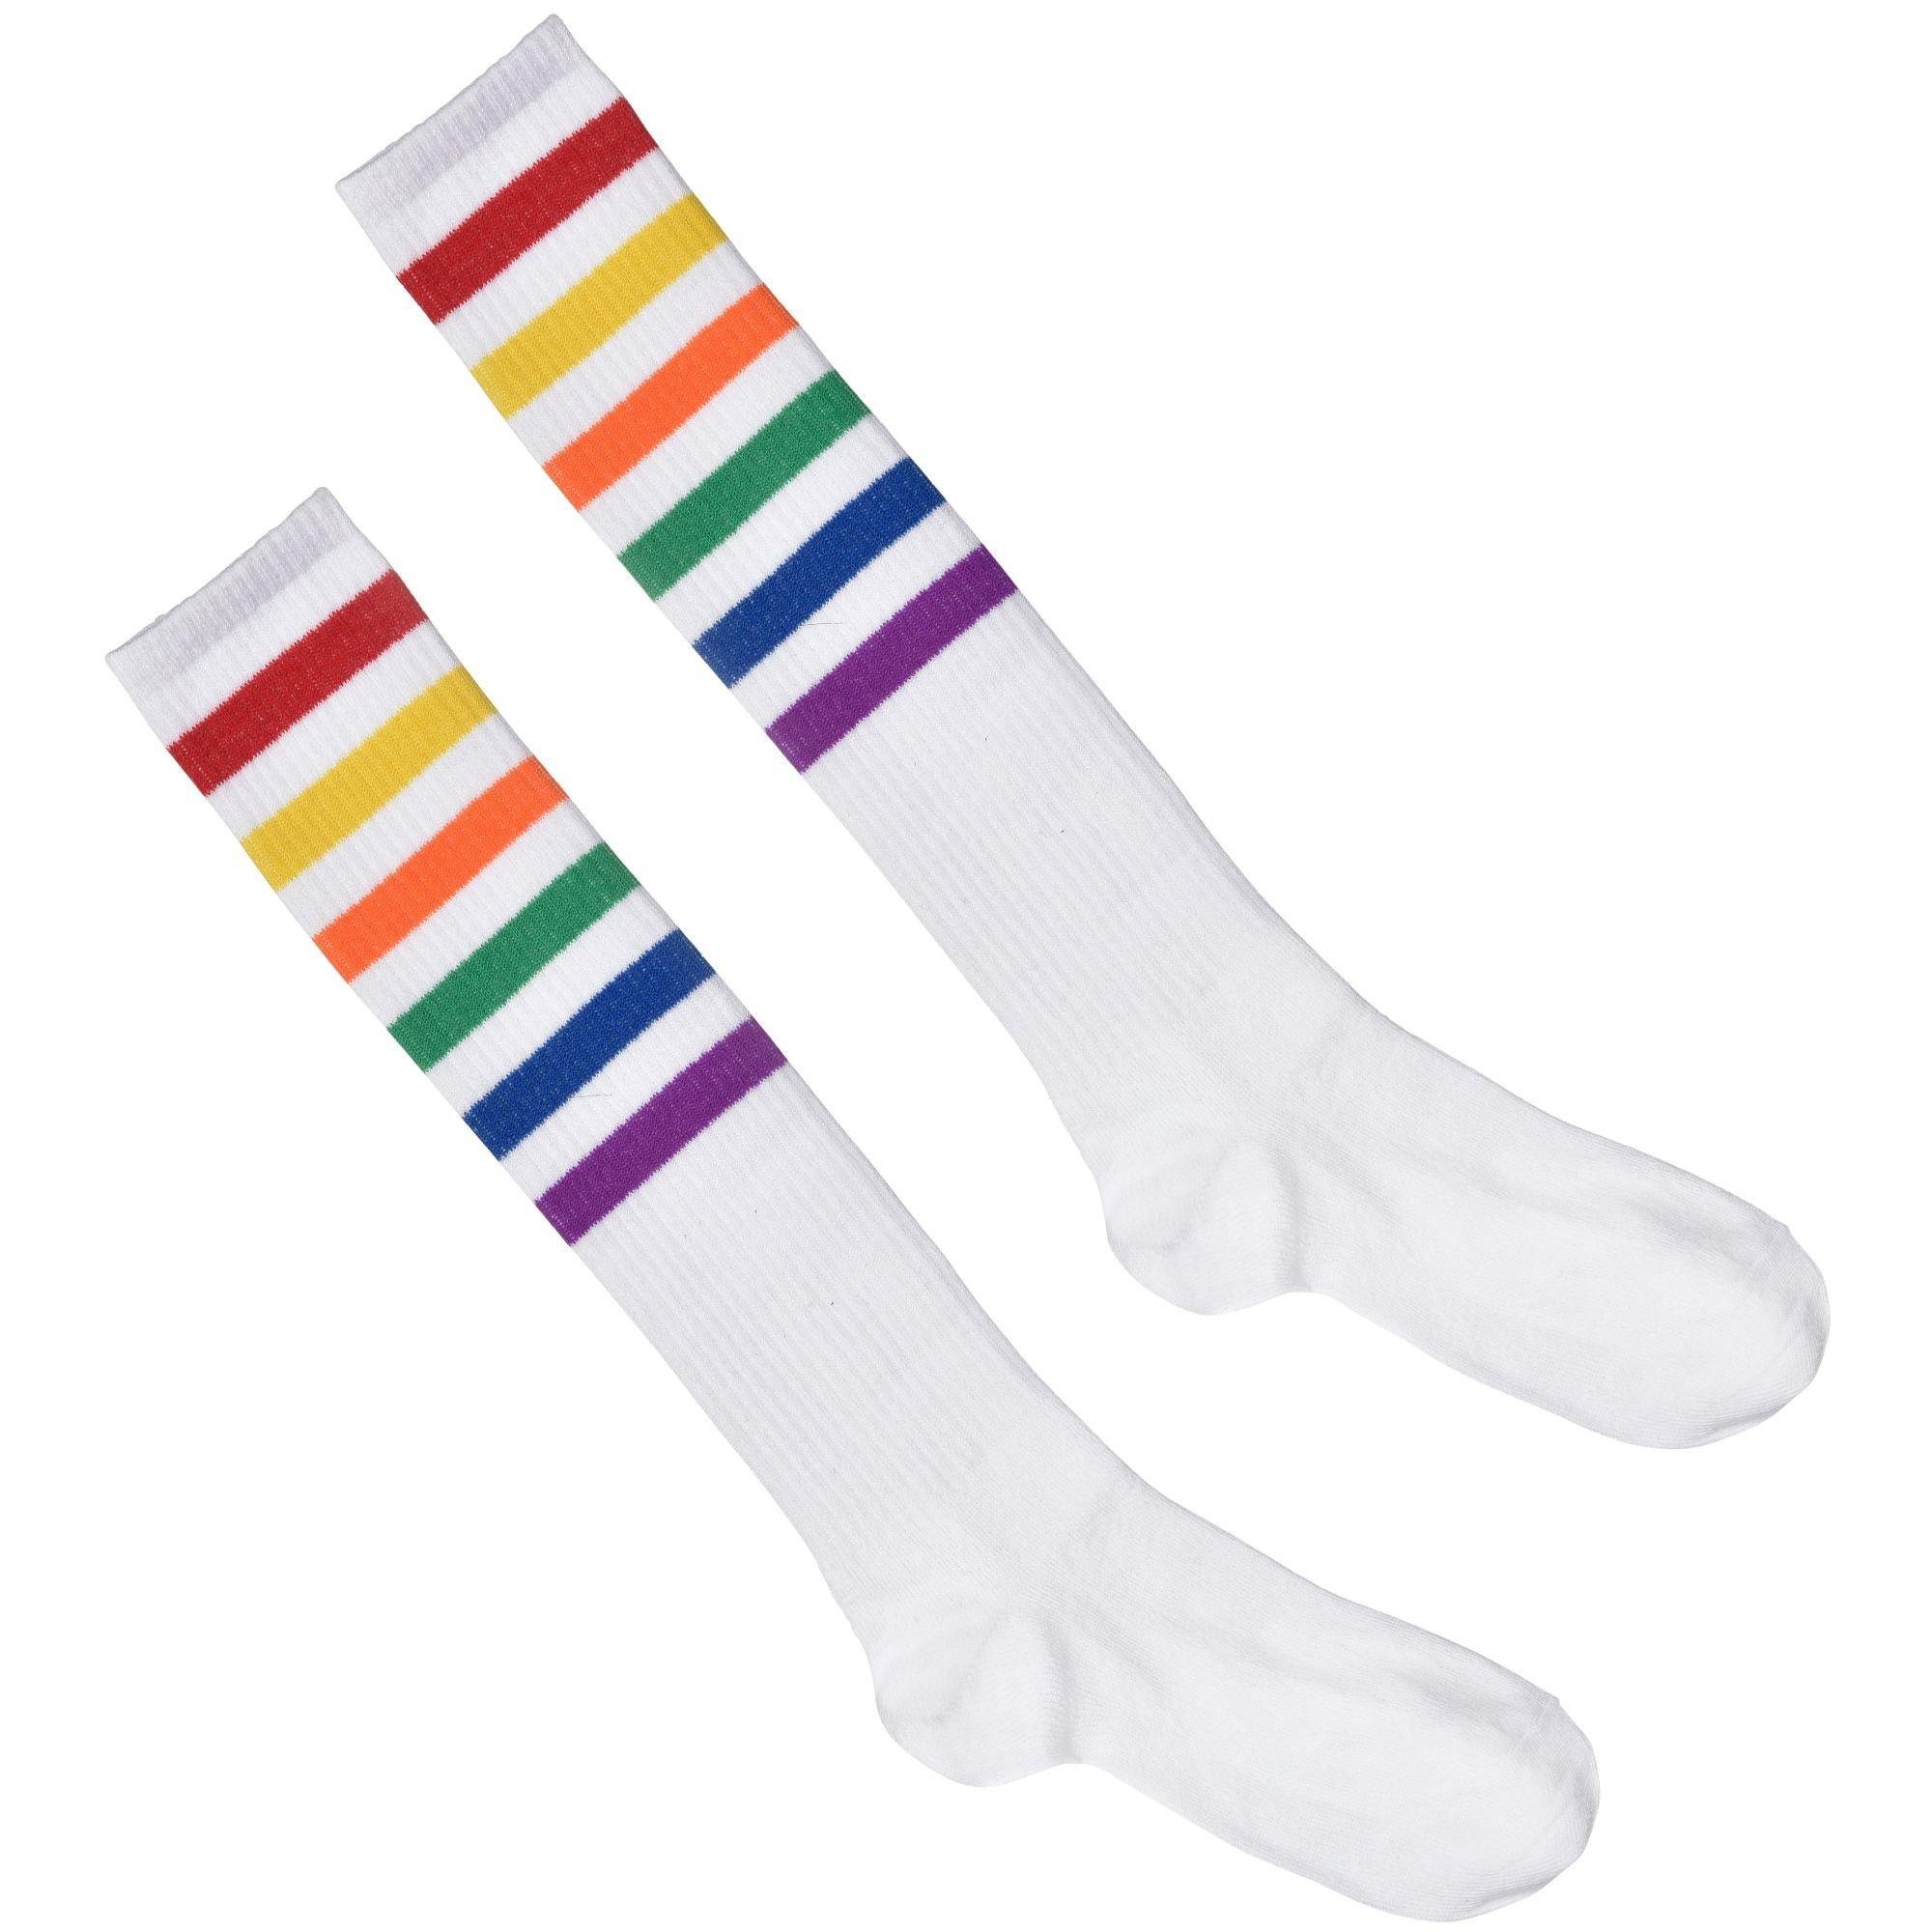 Tortilla socks, Men, Women, gift for tortilla fan - Rainbow Socks